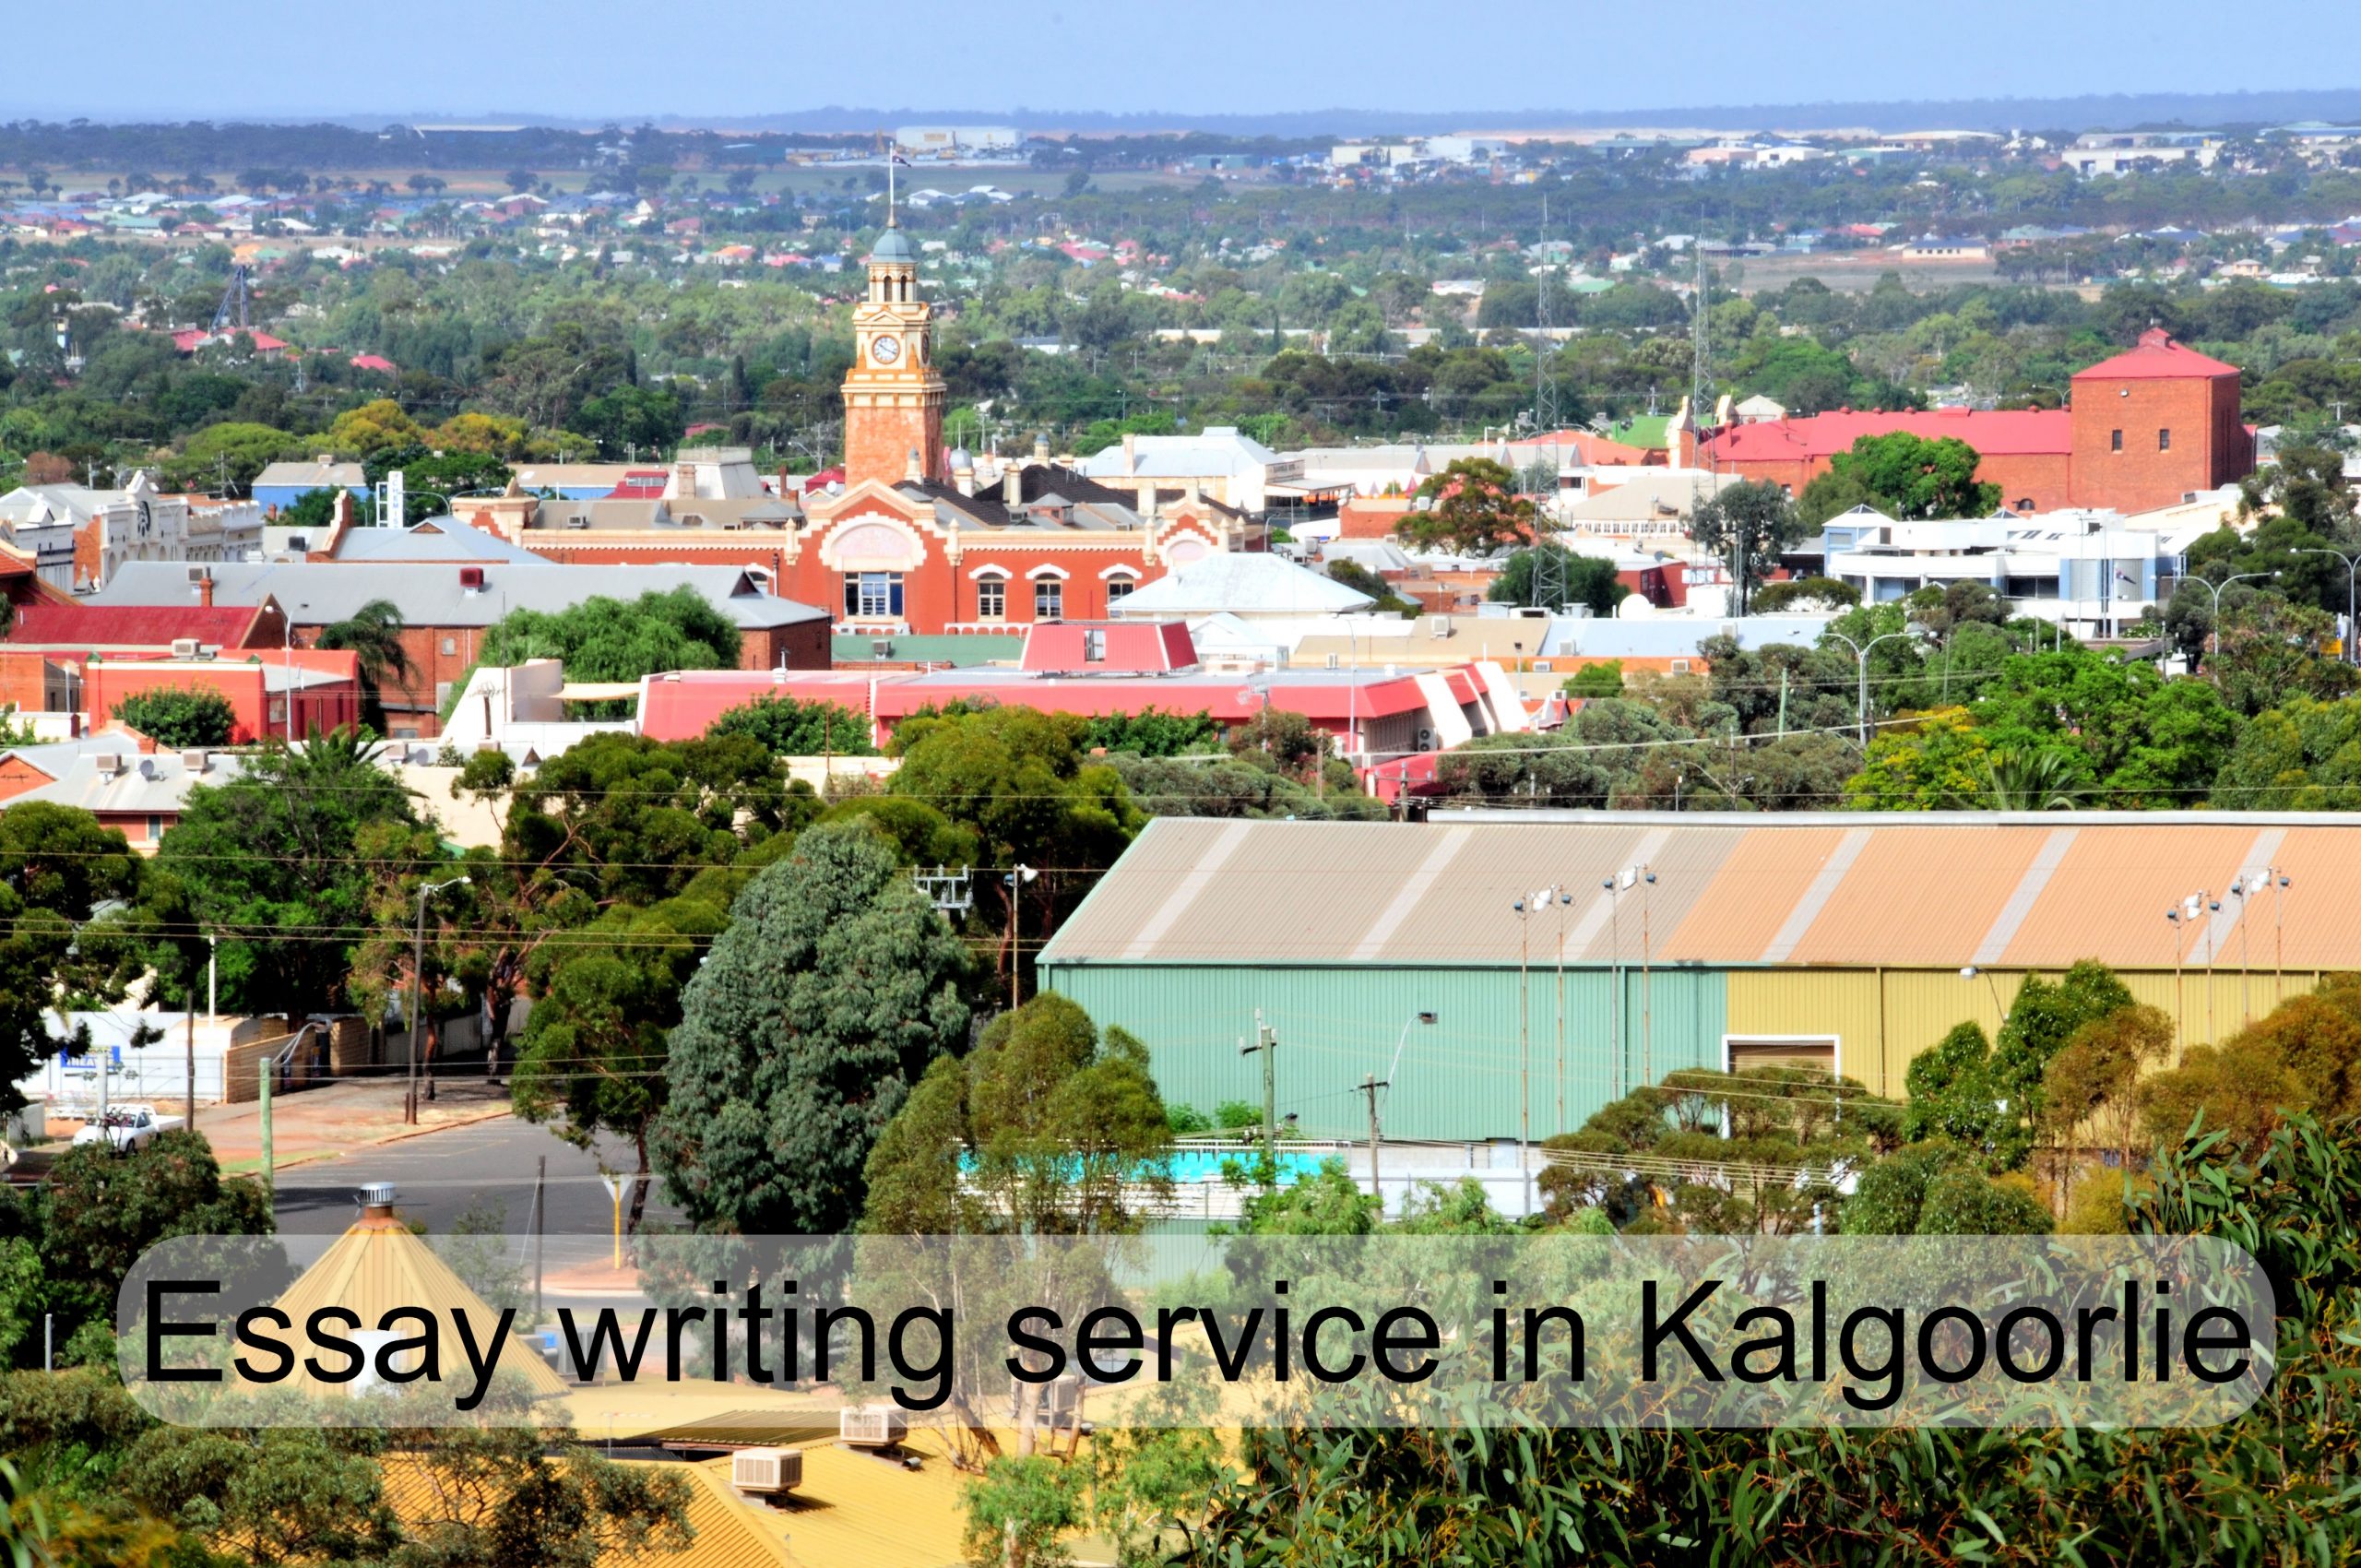 Essay writing service in Kalgoorlie